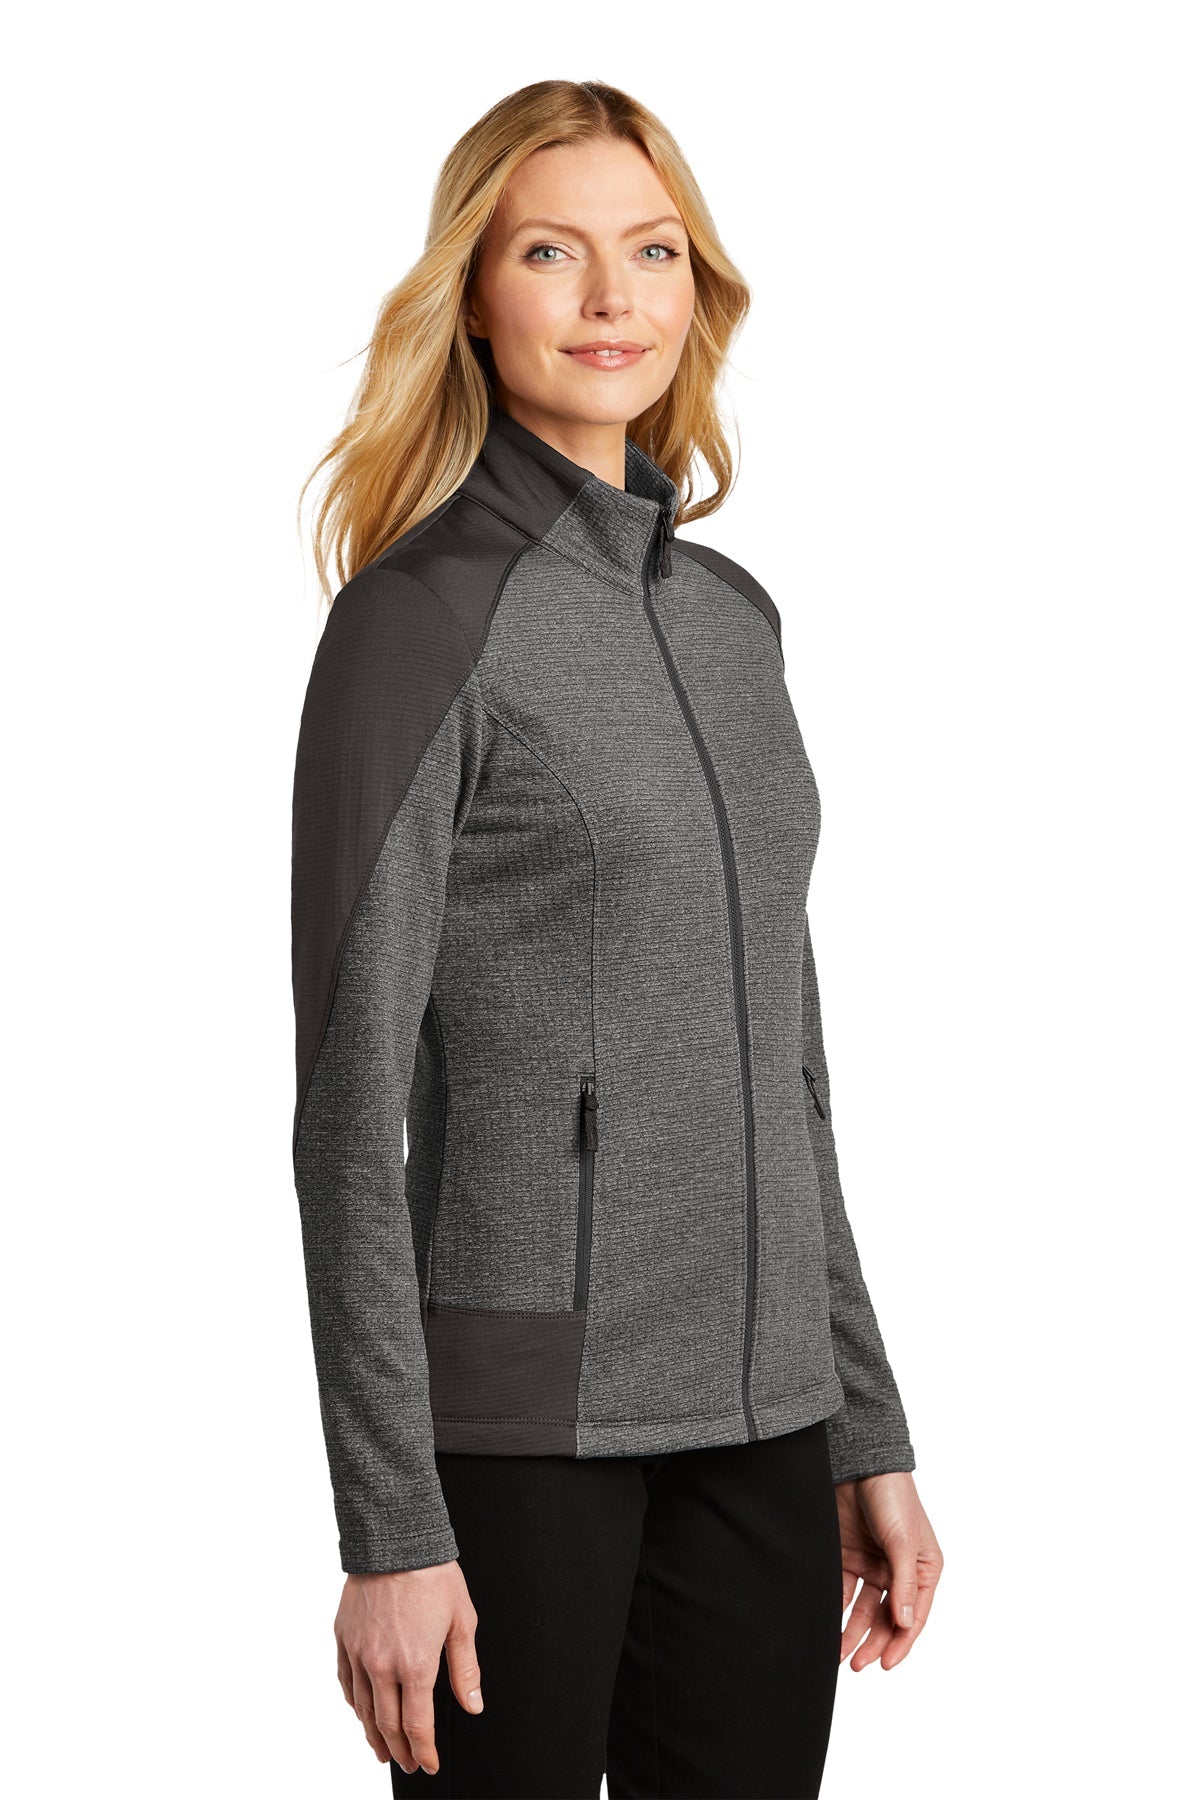 L239 Port Authority® Ladies Grid Fleece Jacket